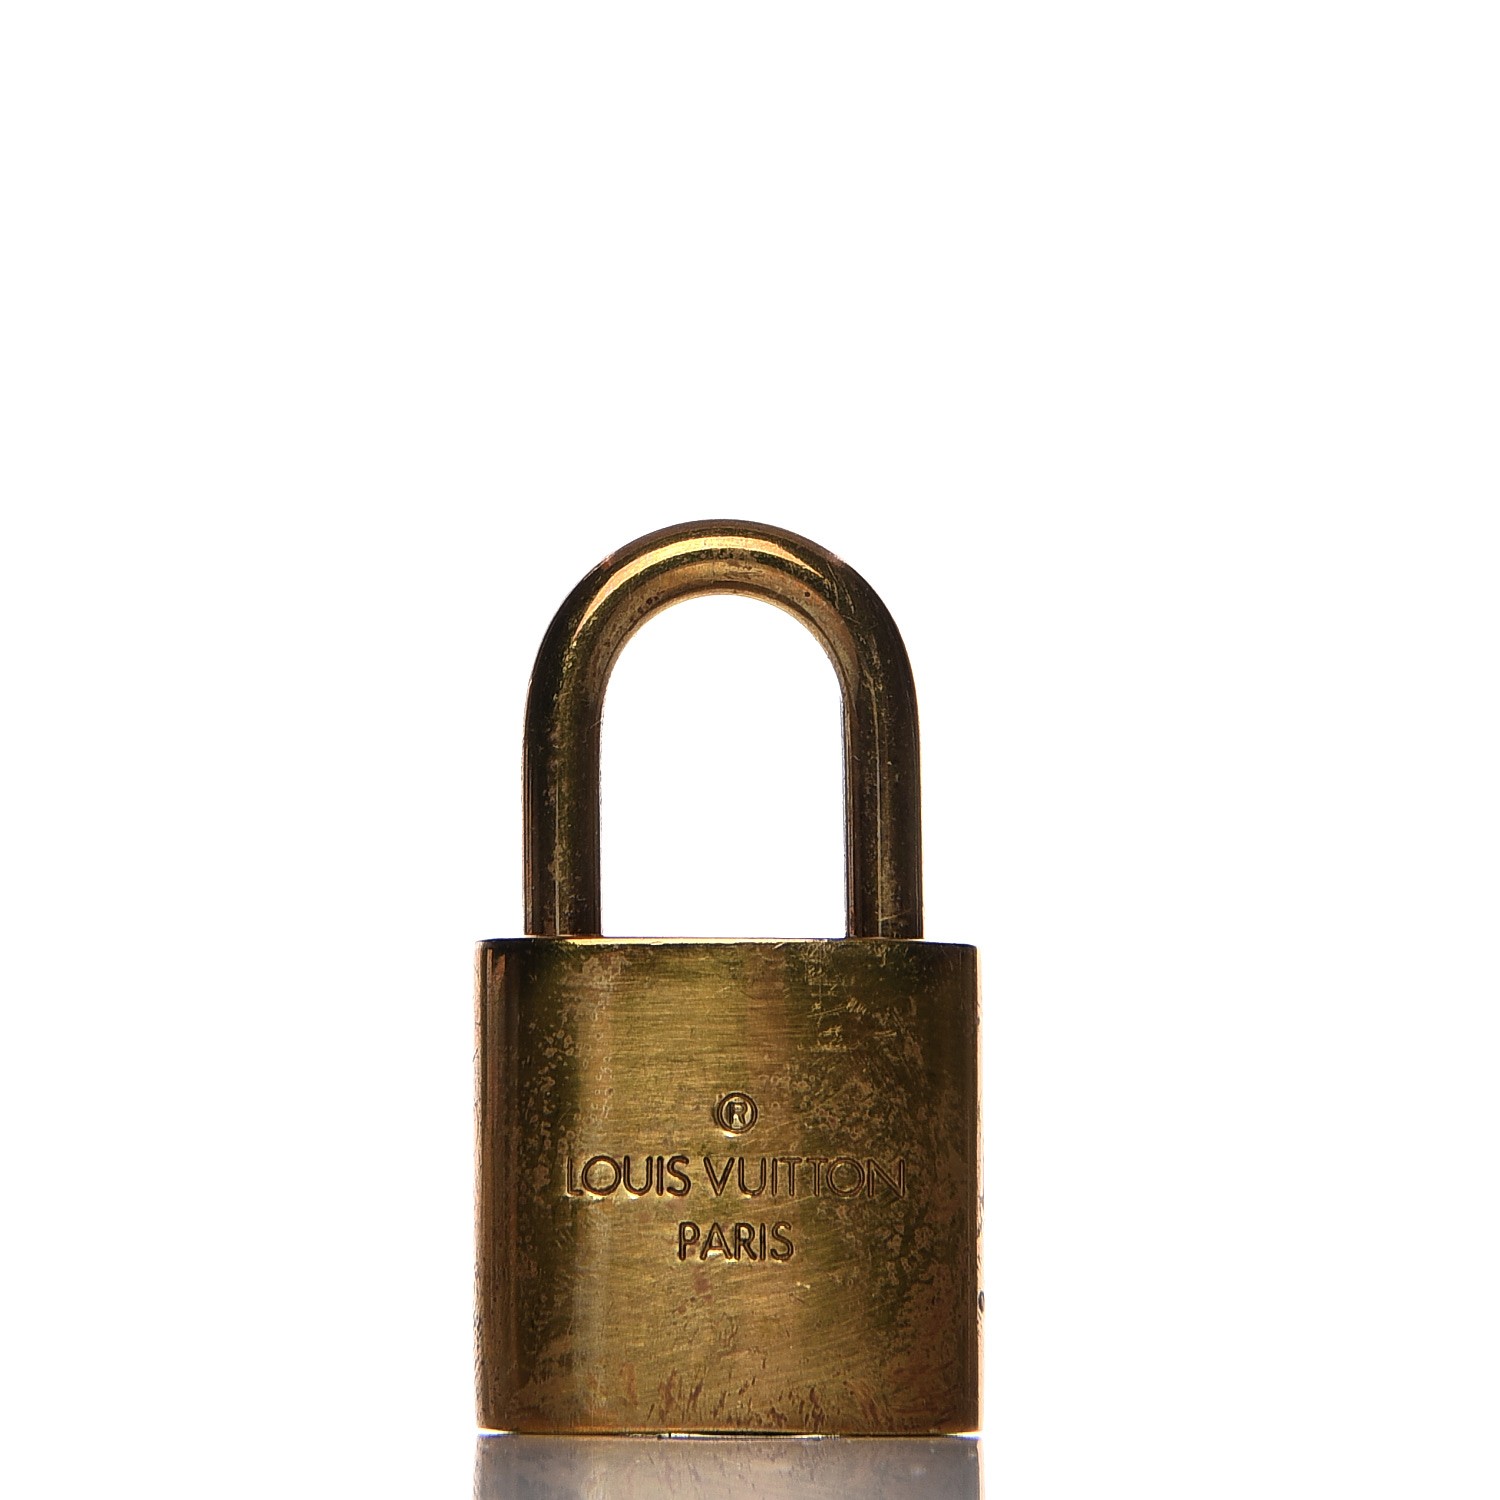 LOUIS VUITTON Brass Lock and 2 Keys Set #307 216696